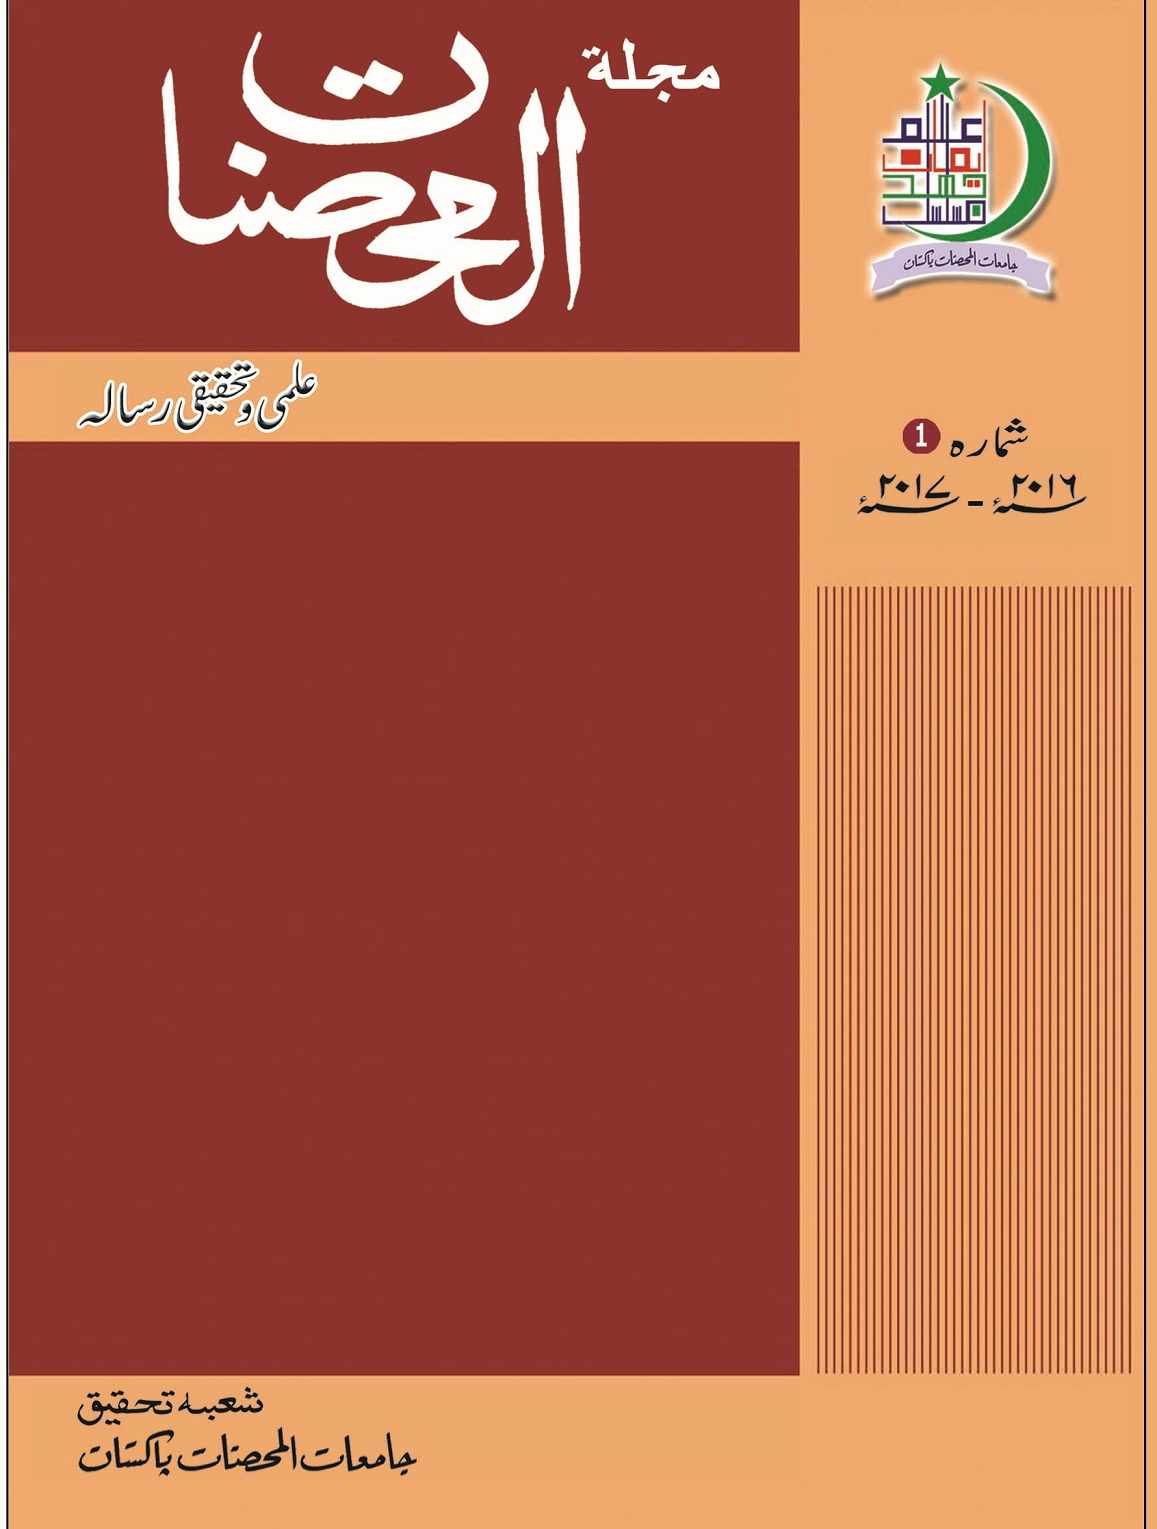 Al-Muhsanat Research Journal